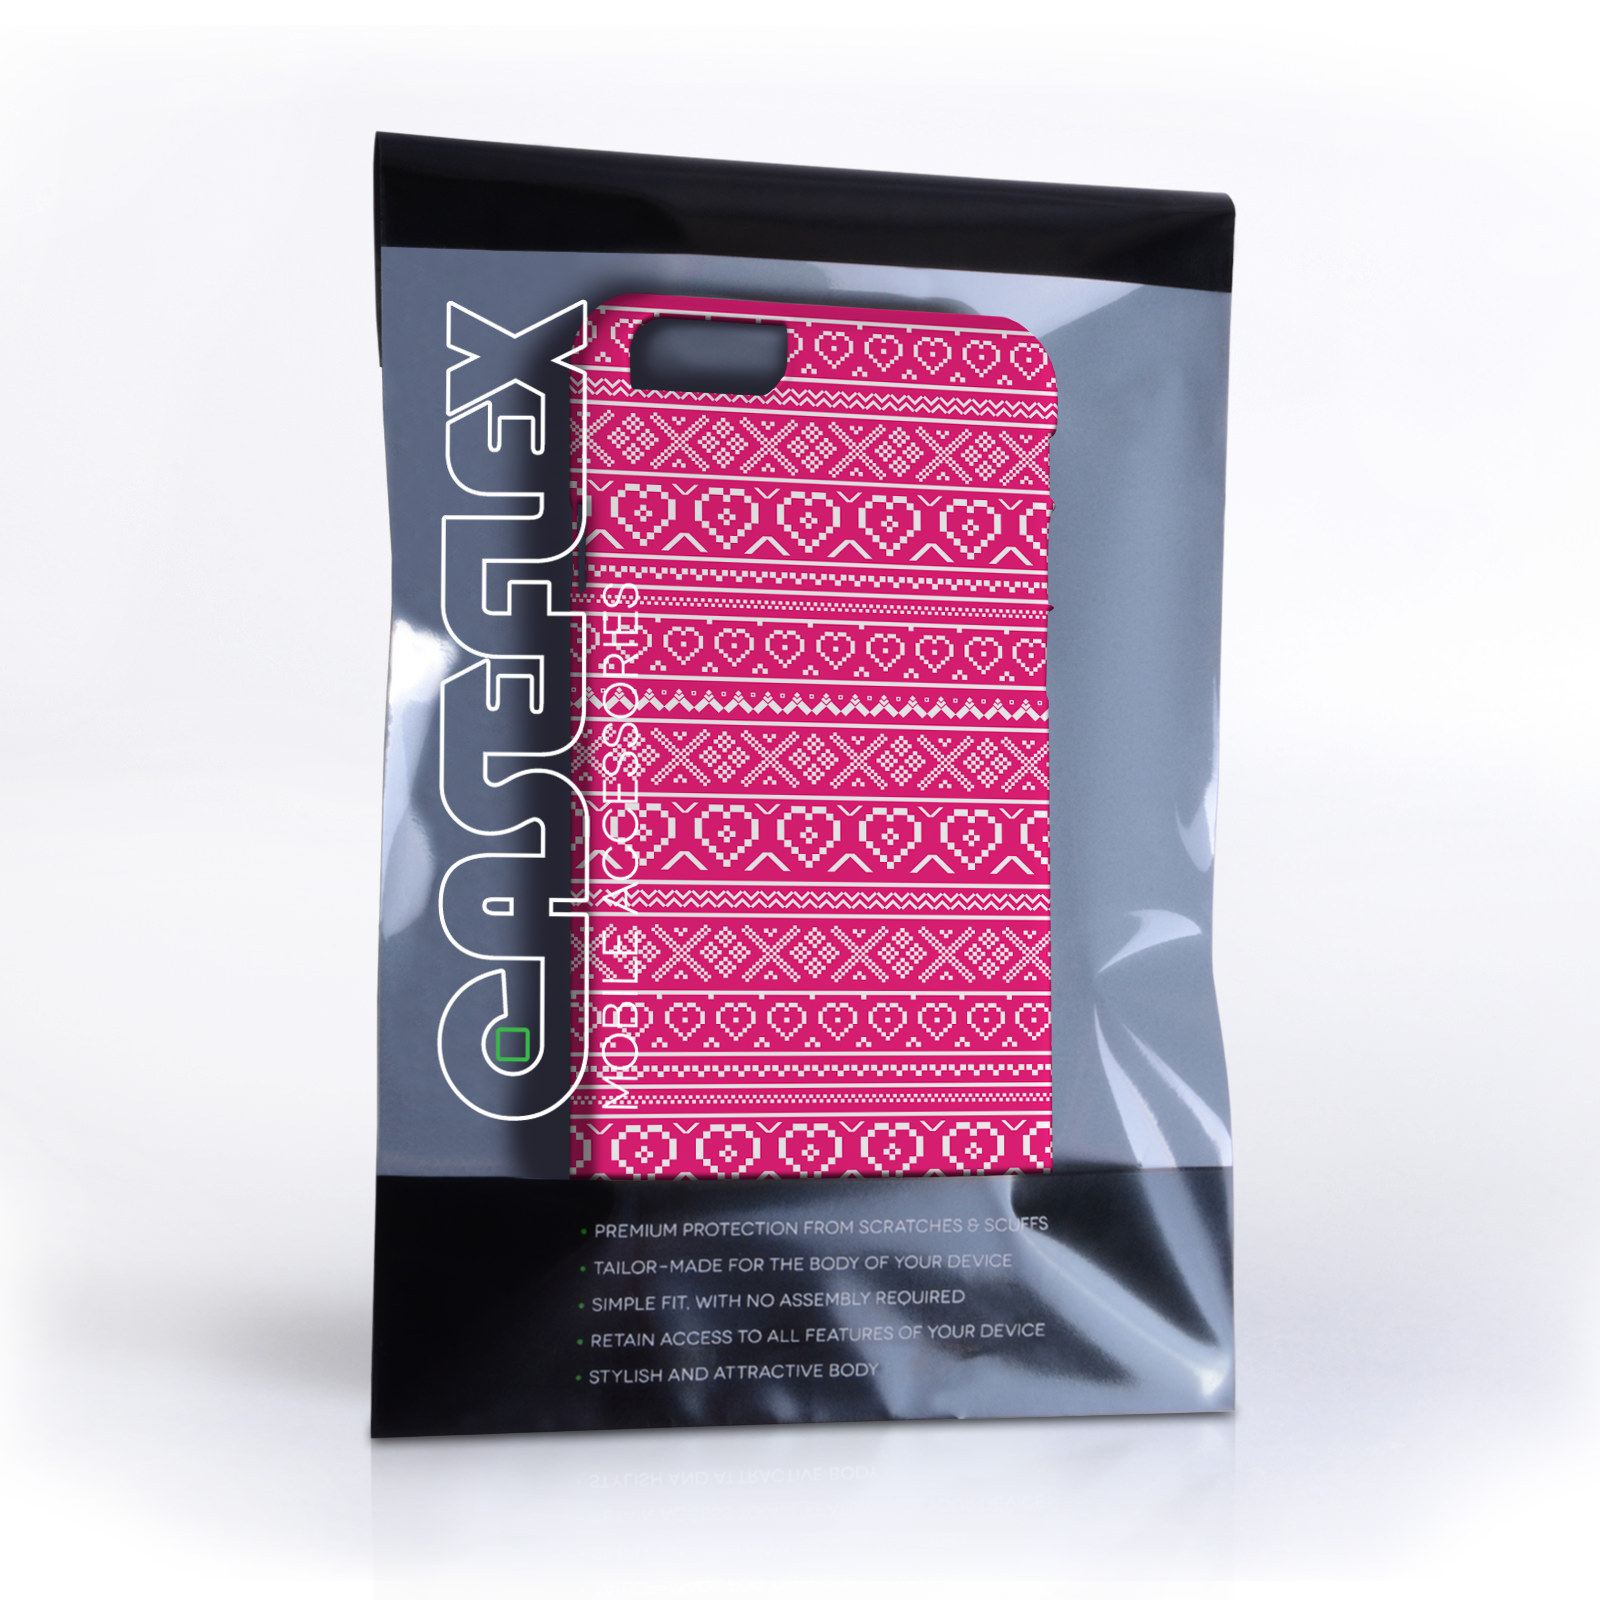 Caseflex iPhone 6 and 6s Case Fair Isle Heart Case - Pink